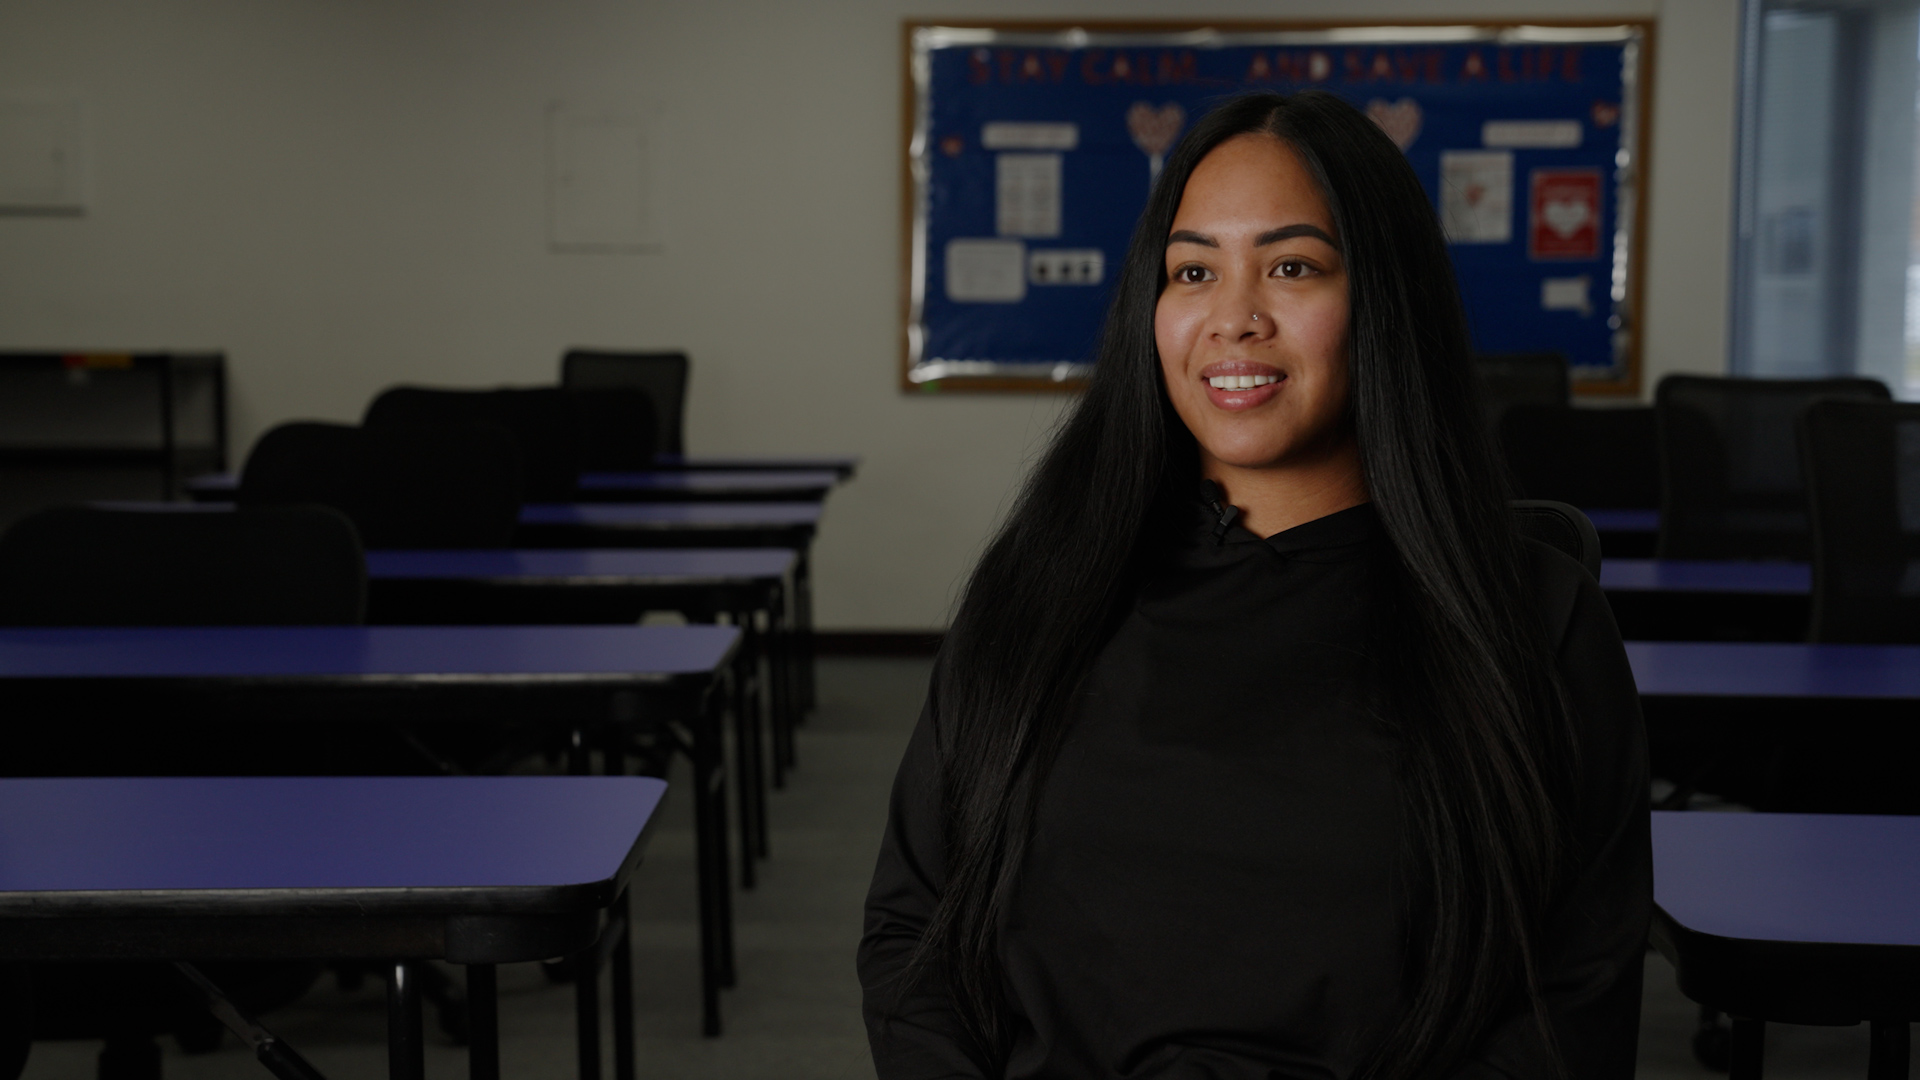 Tiani Luna,wears a black top, sitting inside a classroom